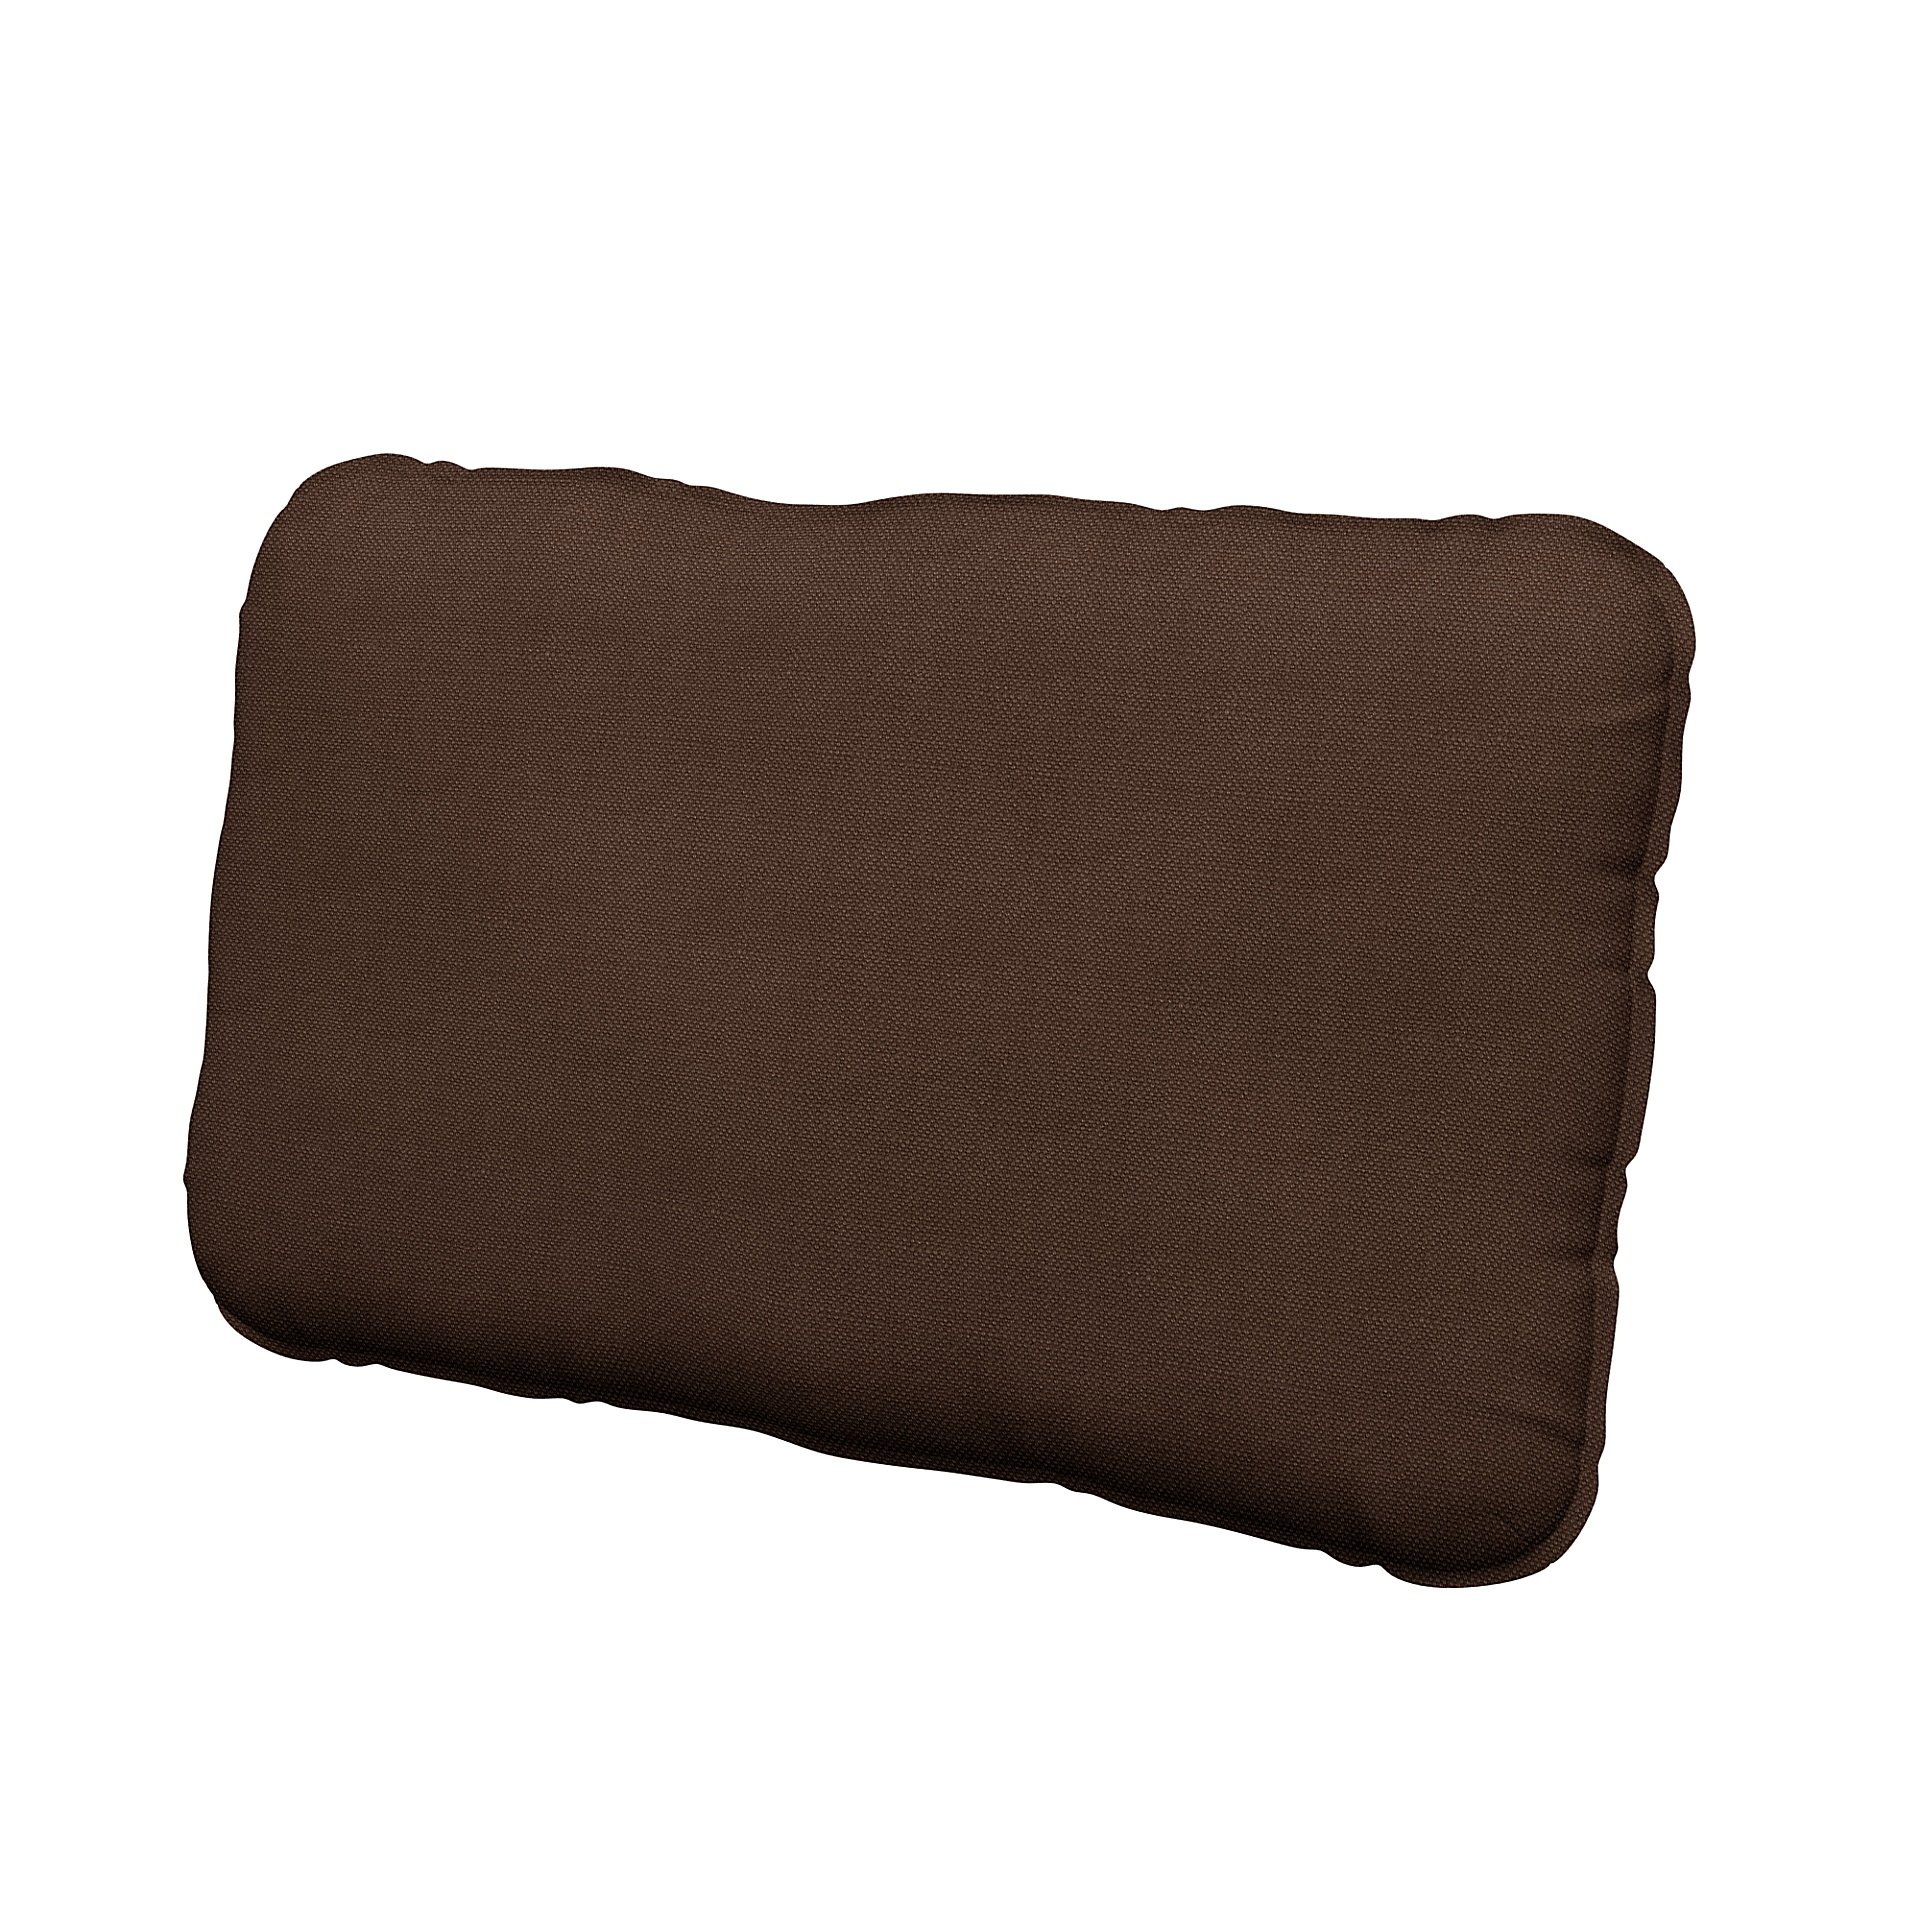 IKEA - Vallentuna back cushion cover 40x75cm, Chocolate, Linen - Bemz